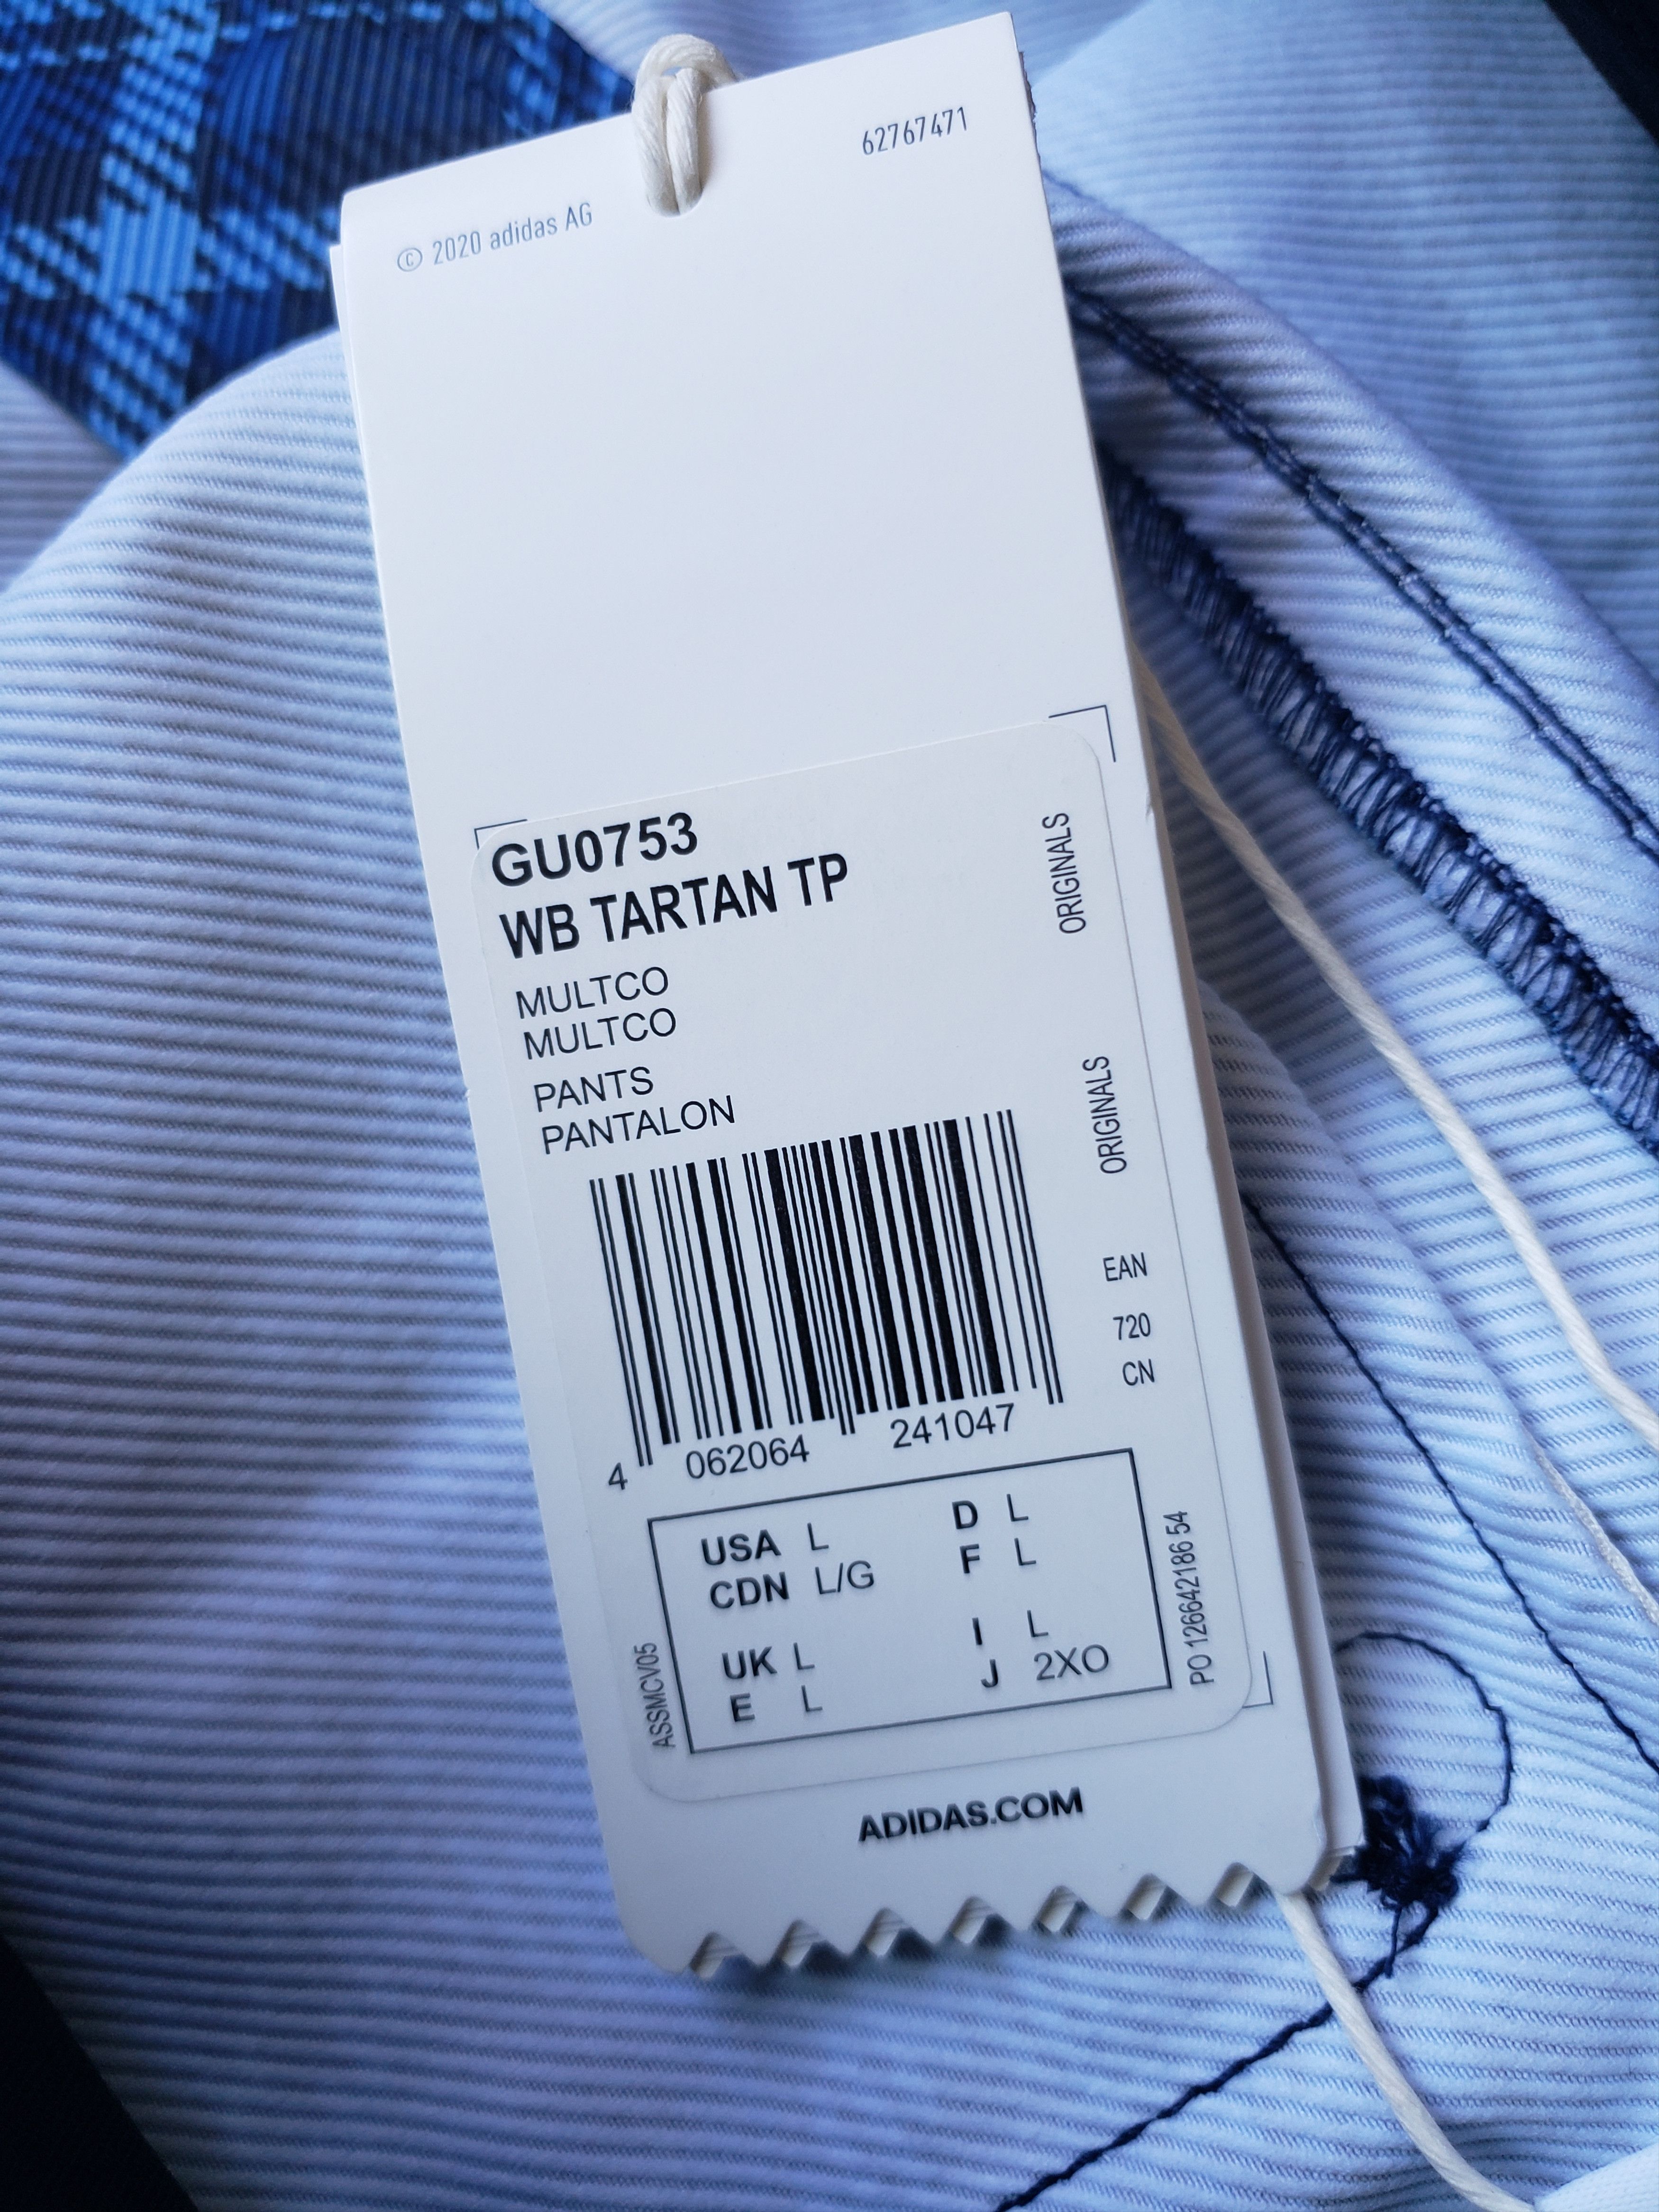 Adidas NEW ADIDAS x Wales Bonner Blue Tartan Track Pants L GU0753 Size US 36 / EU 52 - 7 Thumbnail